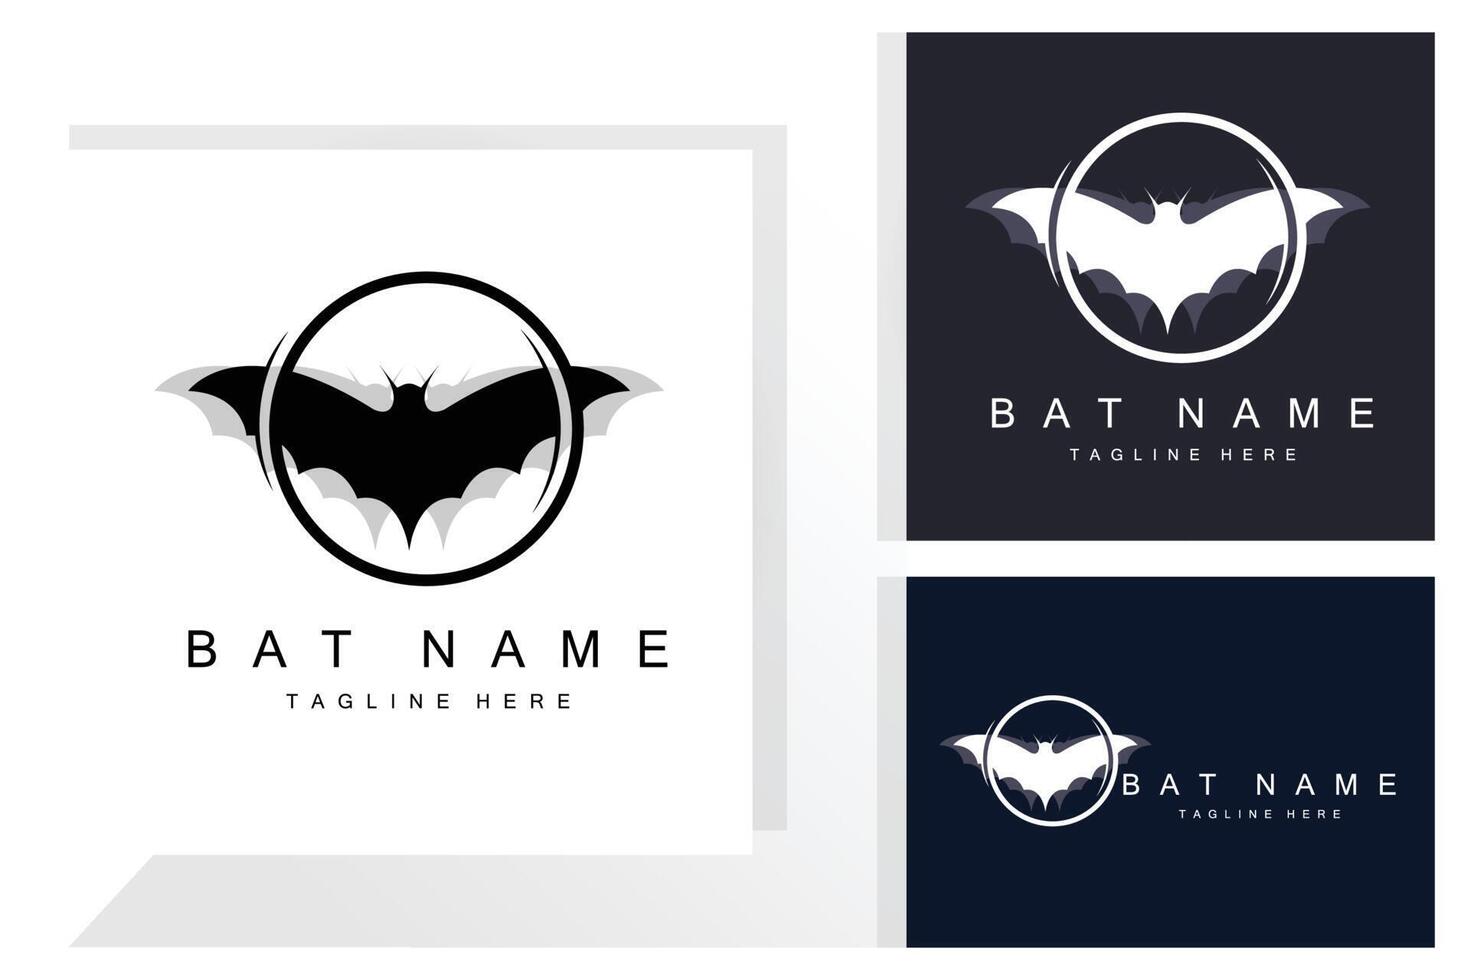 night animal halloween bat logo vector symbol